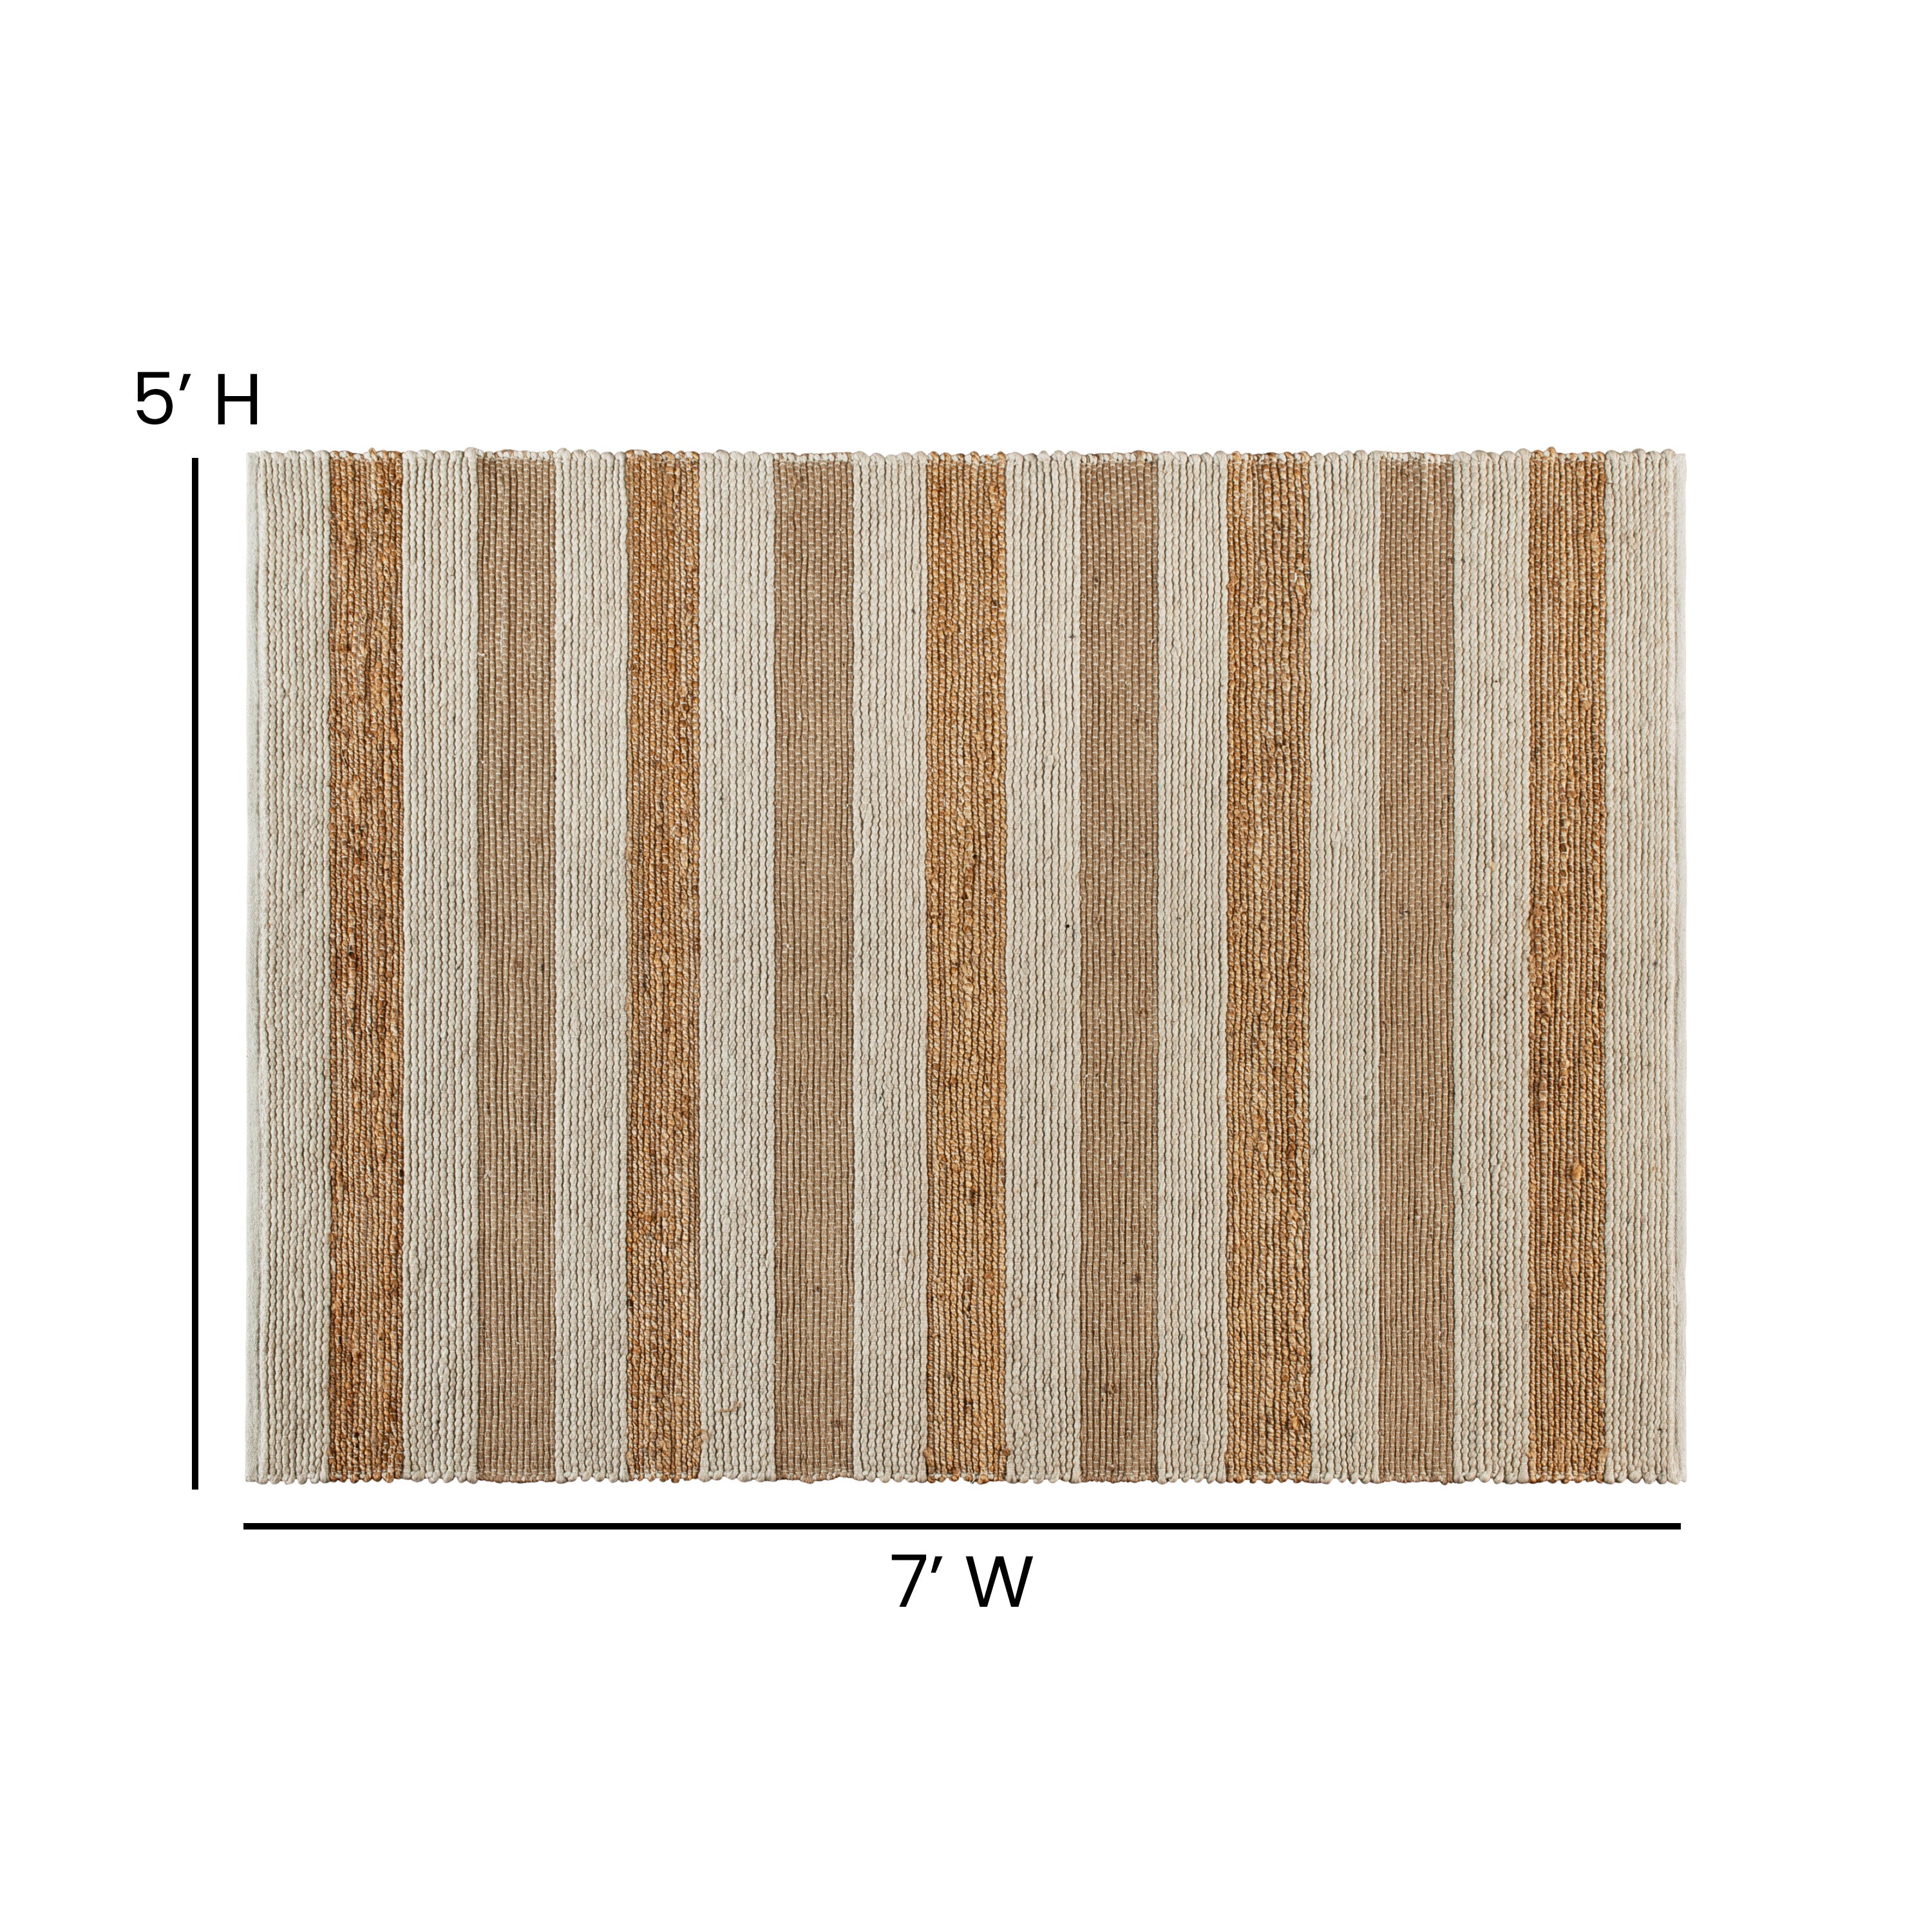 Handwoven Striped Jute Blend Area Rug in Tones-Area Rug-Flash Furniture-Wall2Wall Furnishings